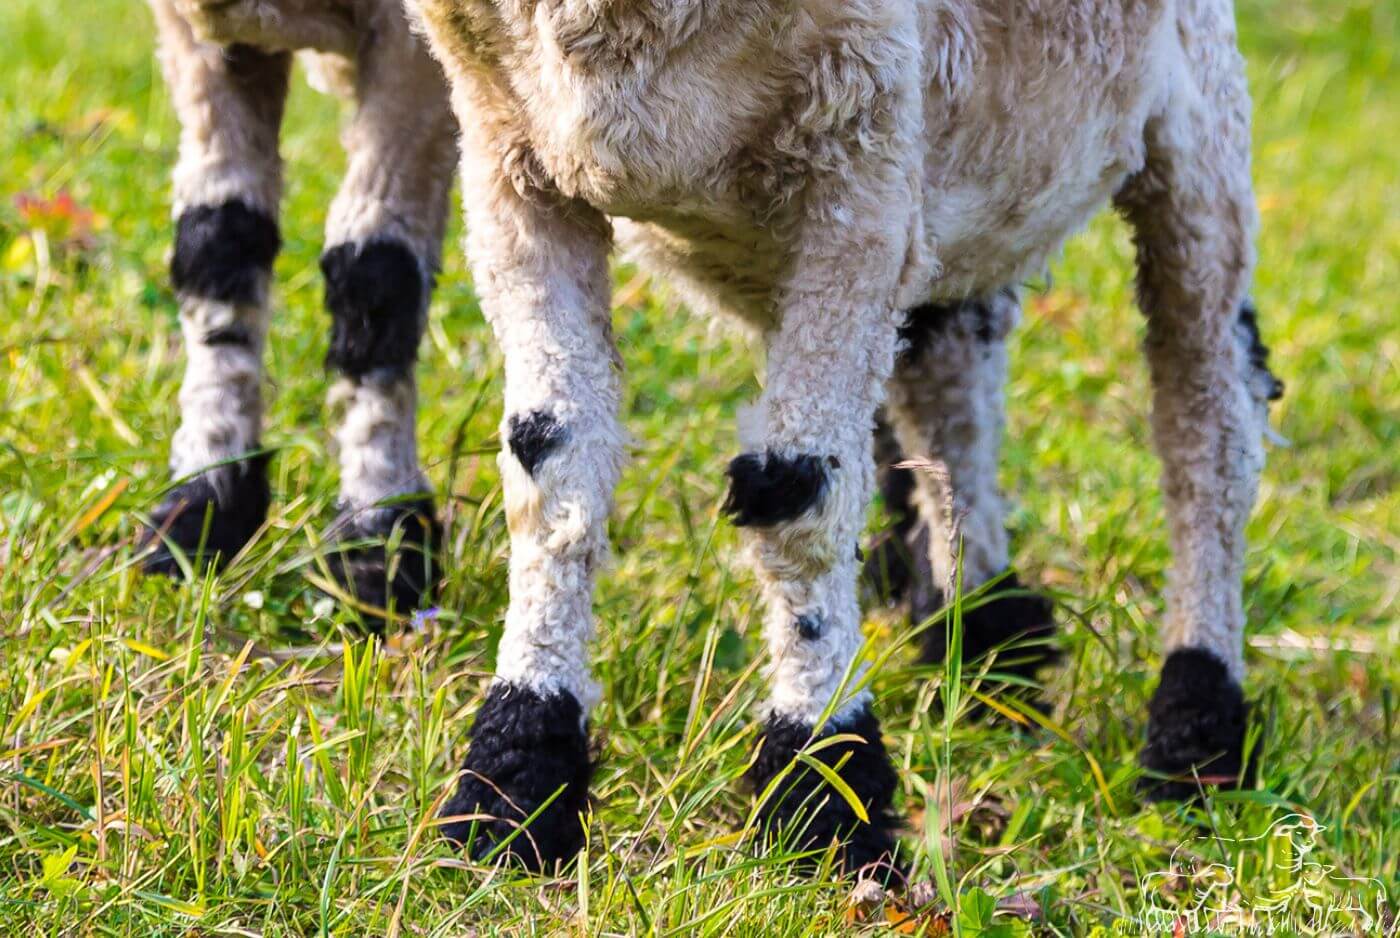 Valais Blacknose Sheep legs